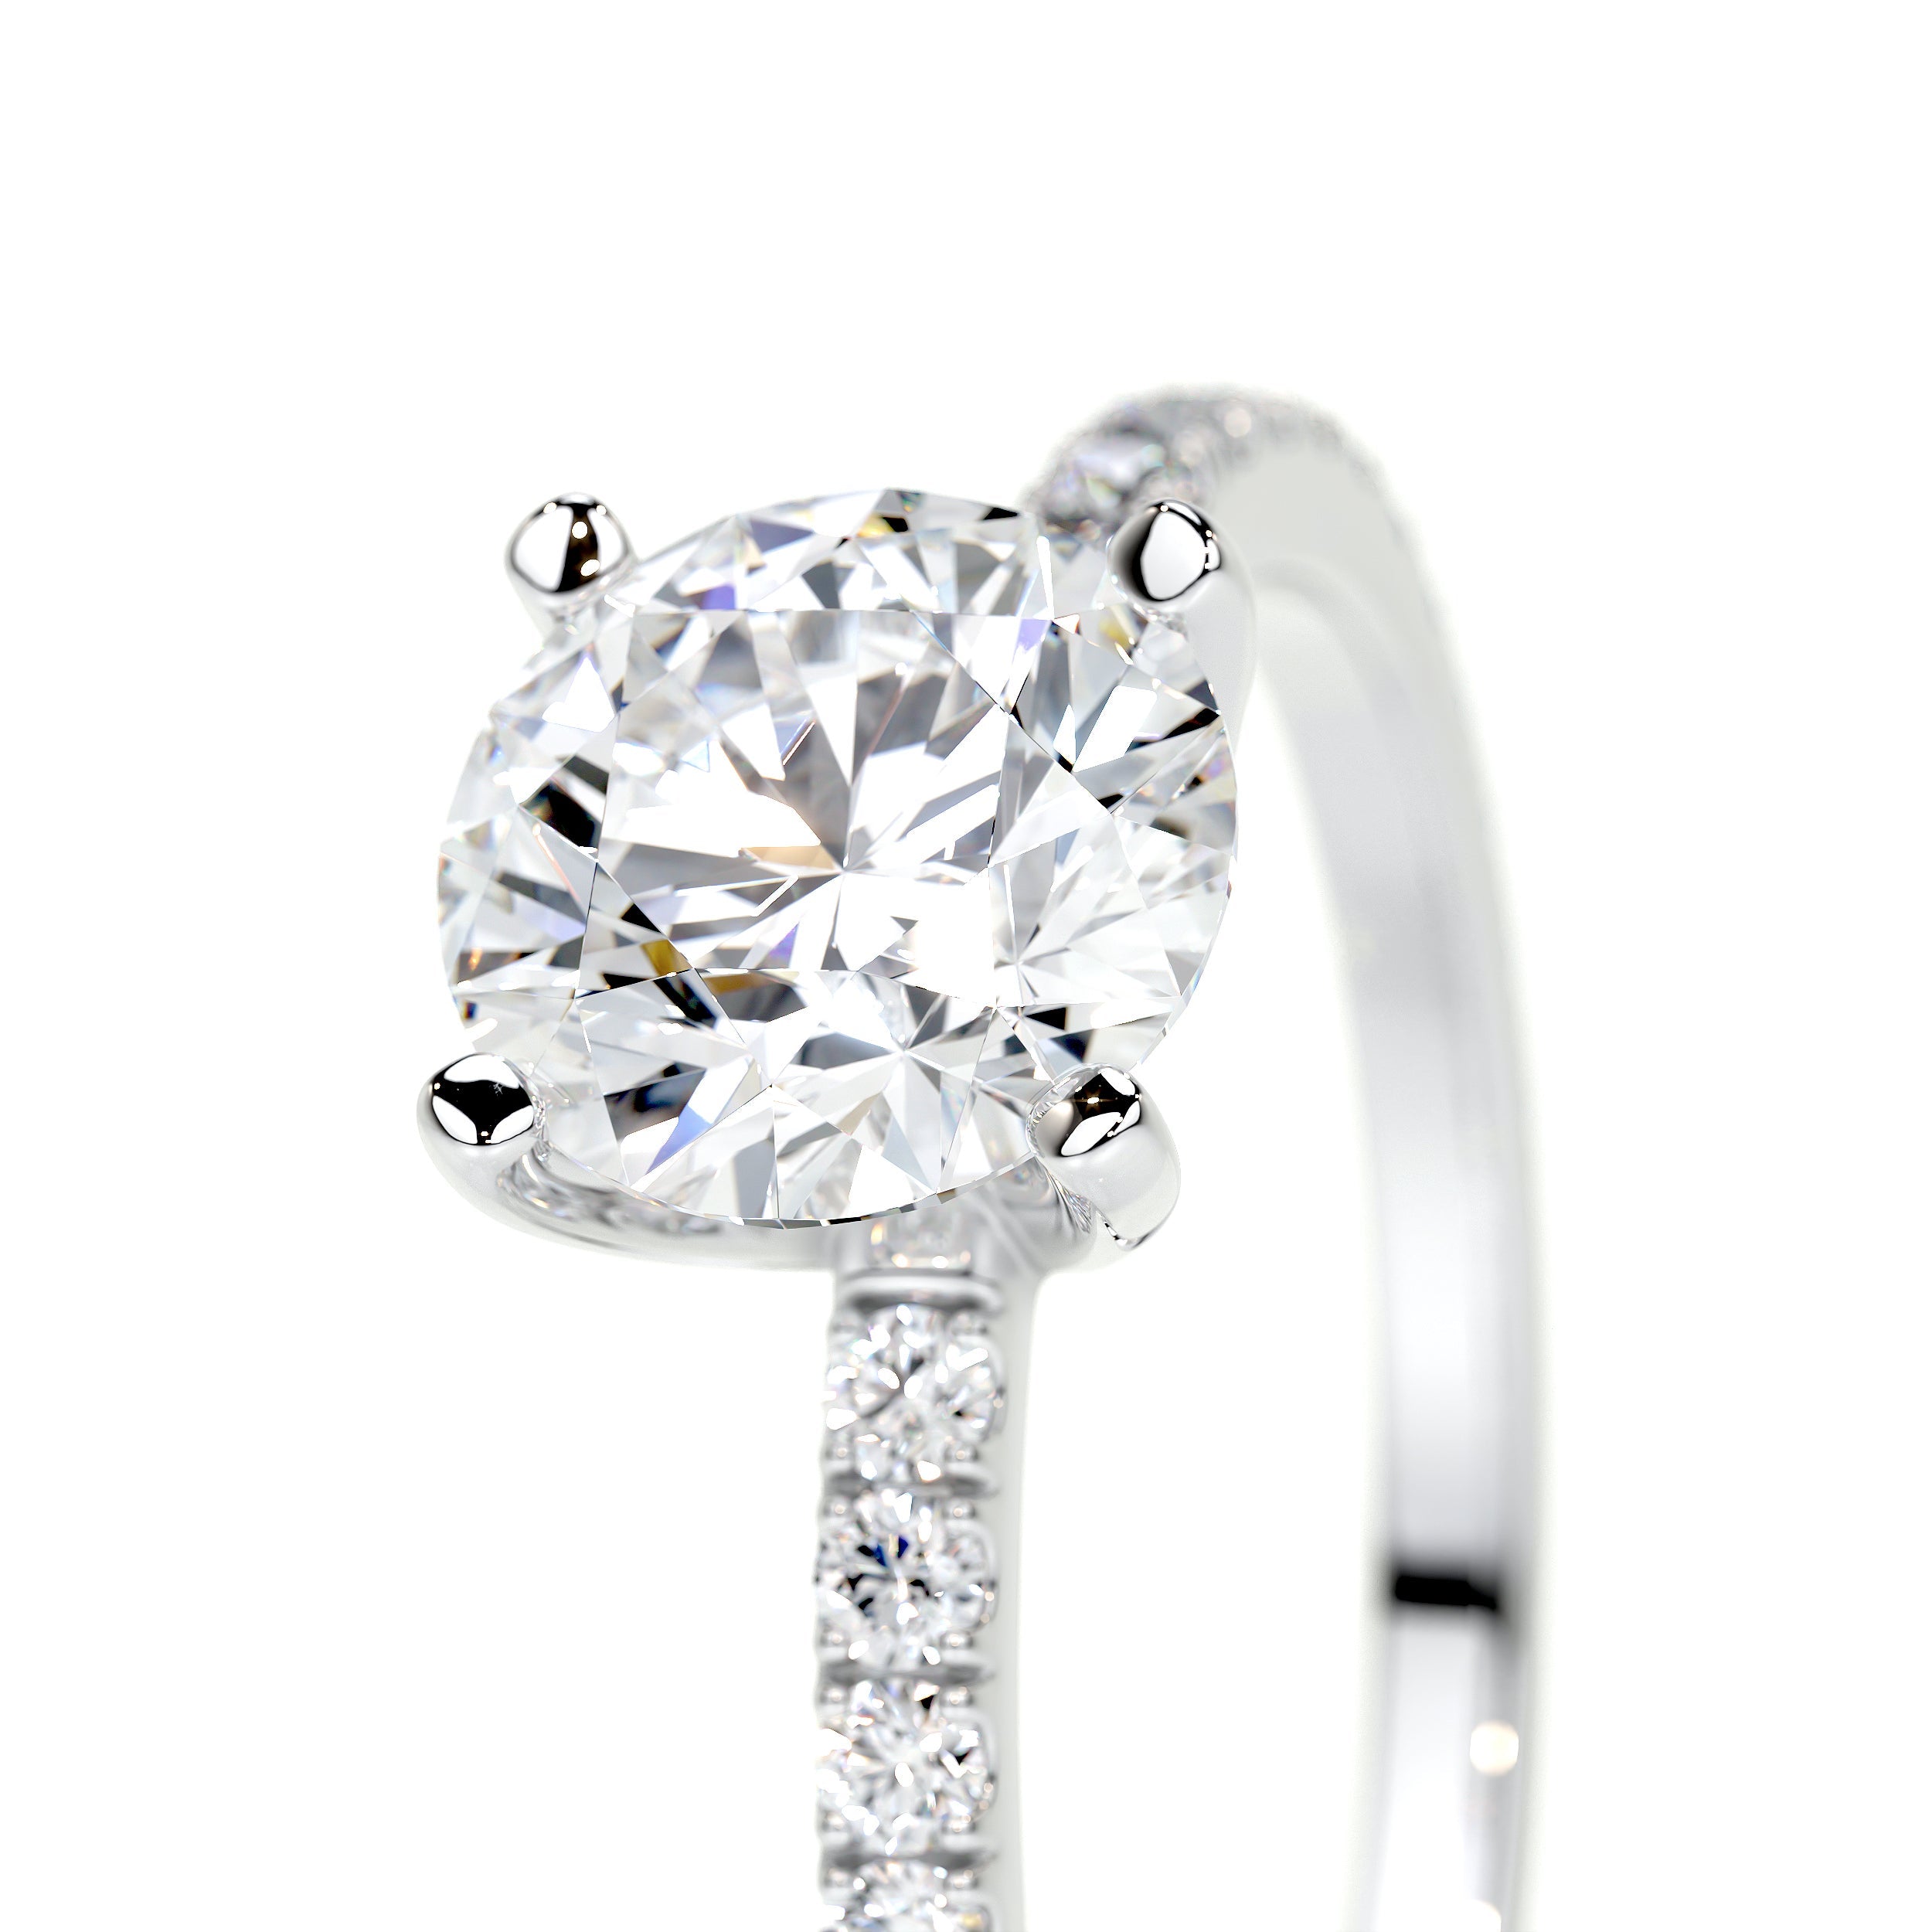 Stephanie Lab Grown Diamond Ring   (1.3 Carat) -14K White Gold